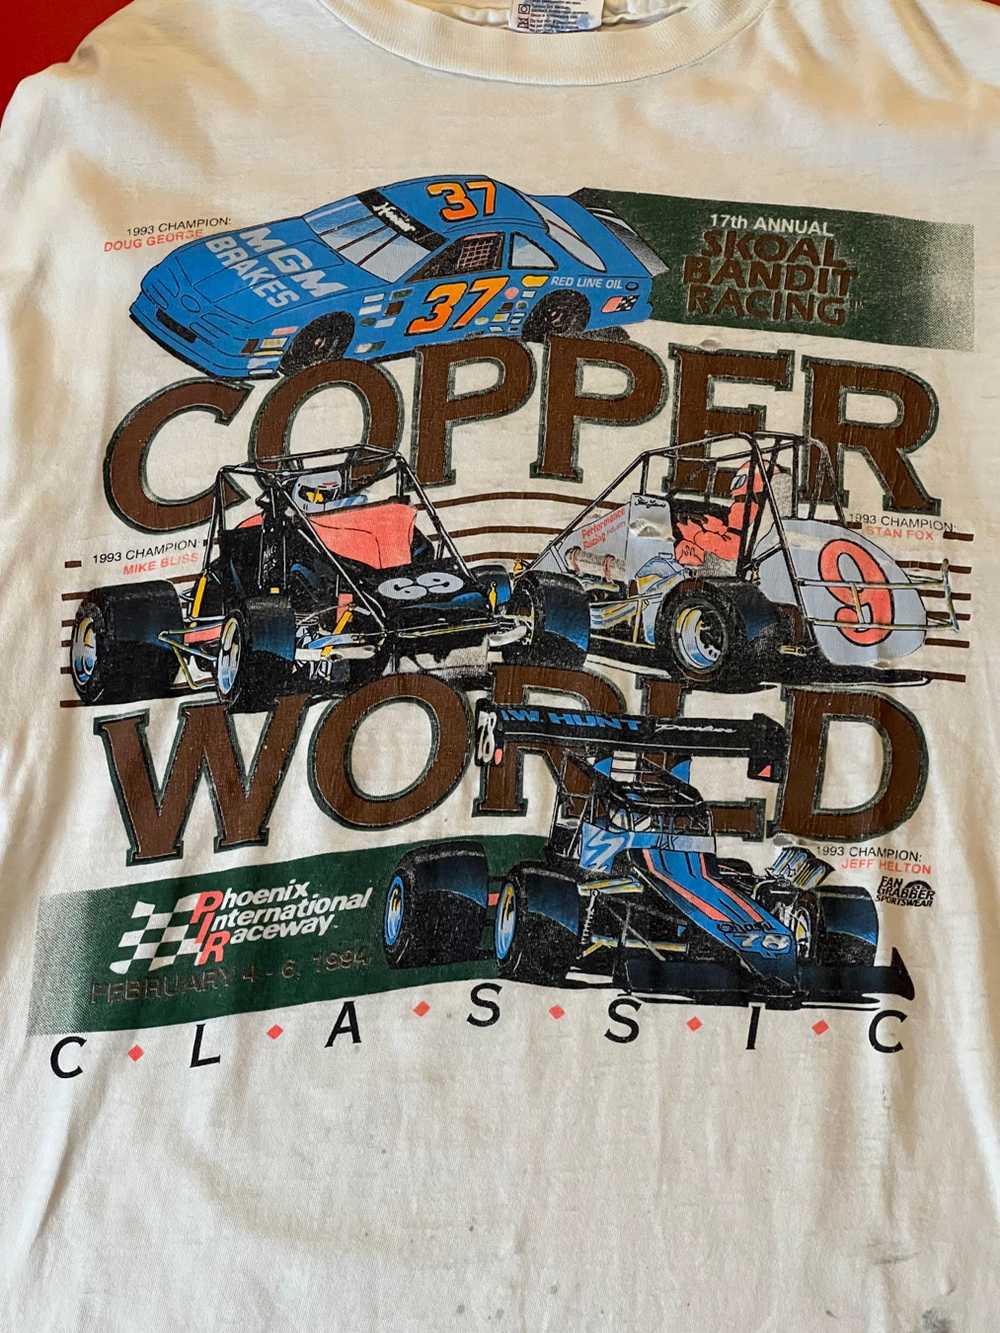 1993 World Copper Classic Shirt - image 2